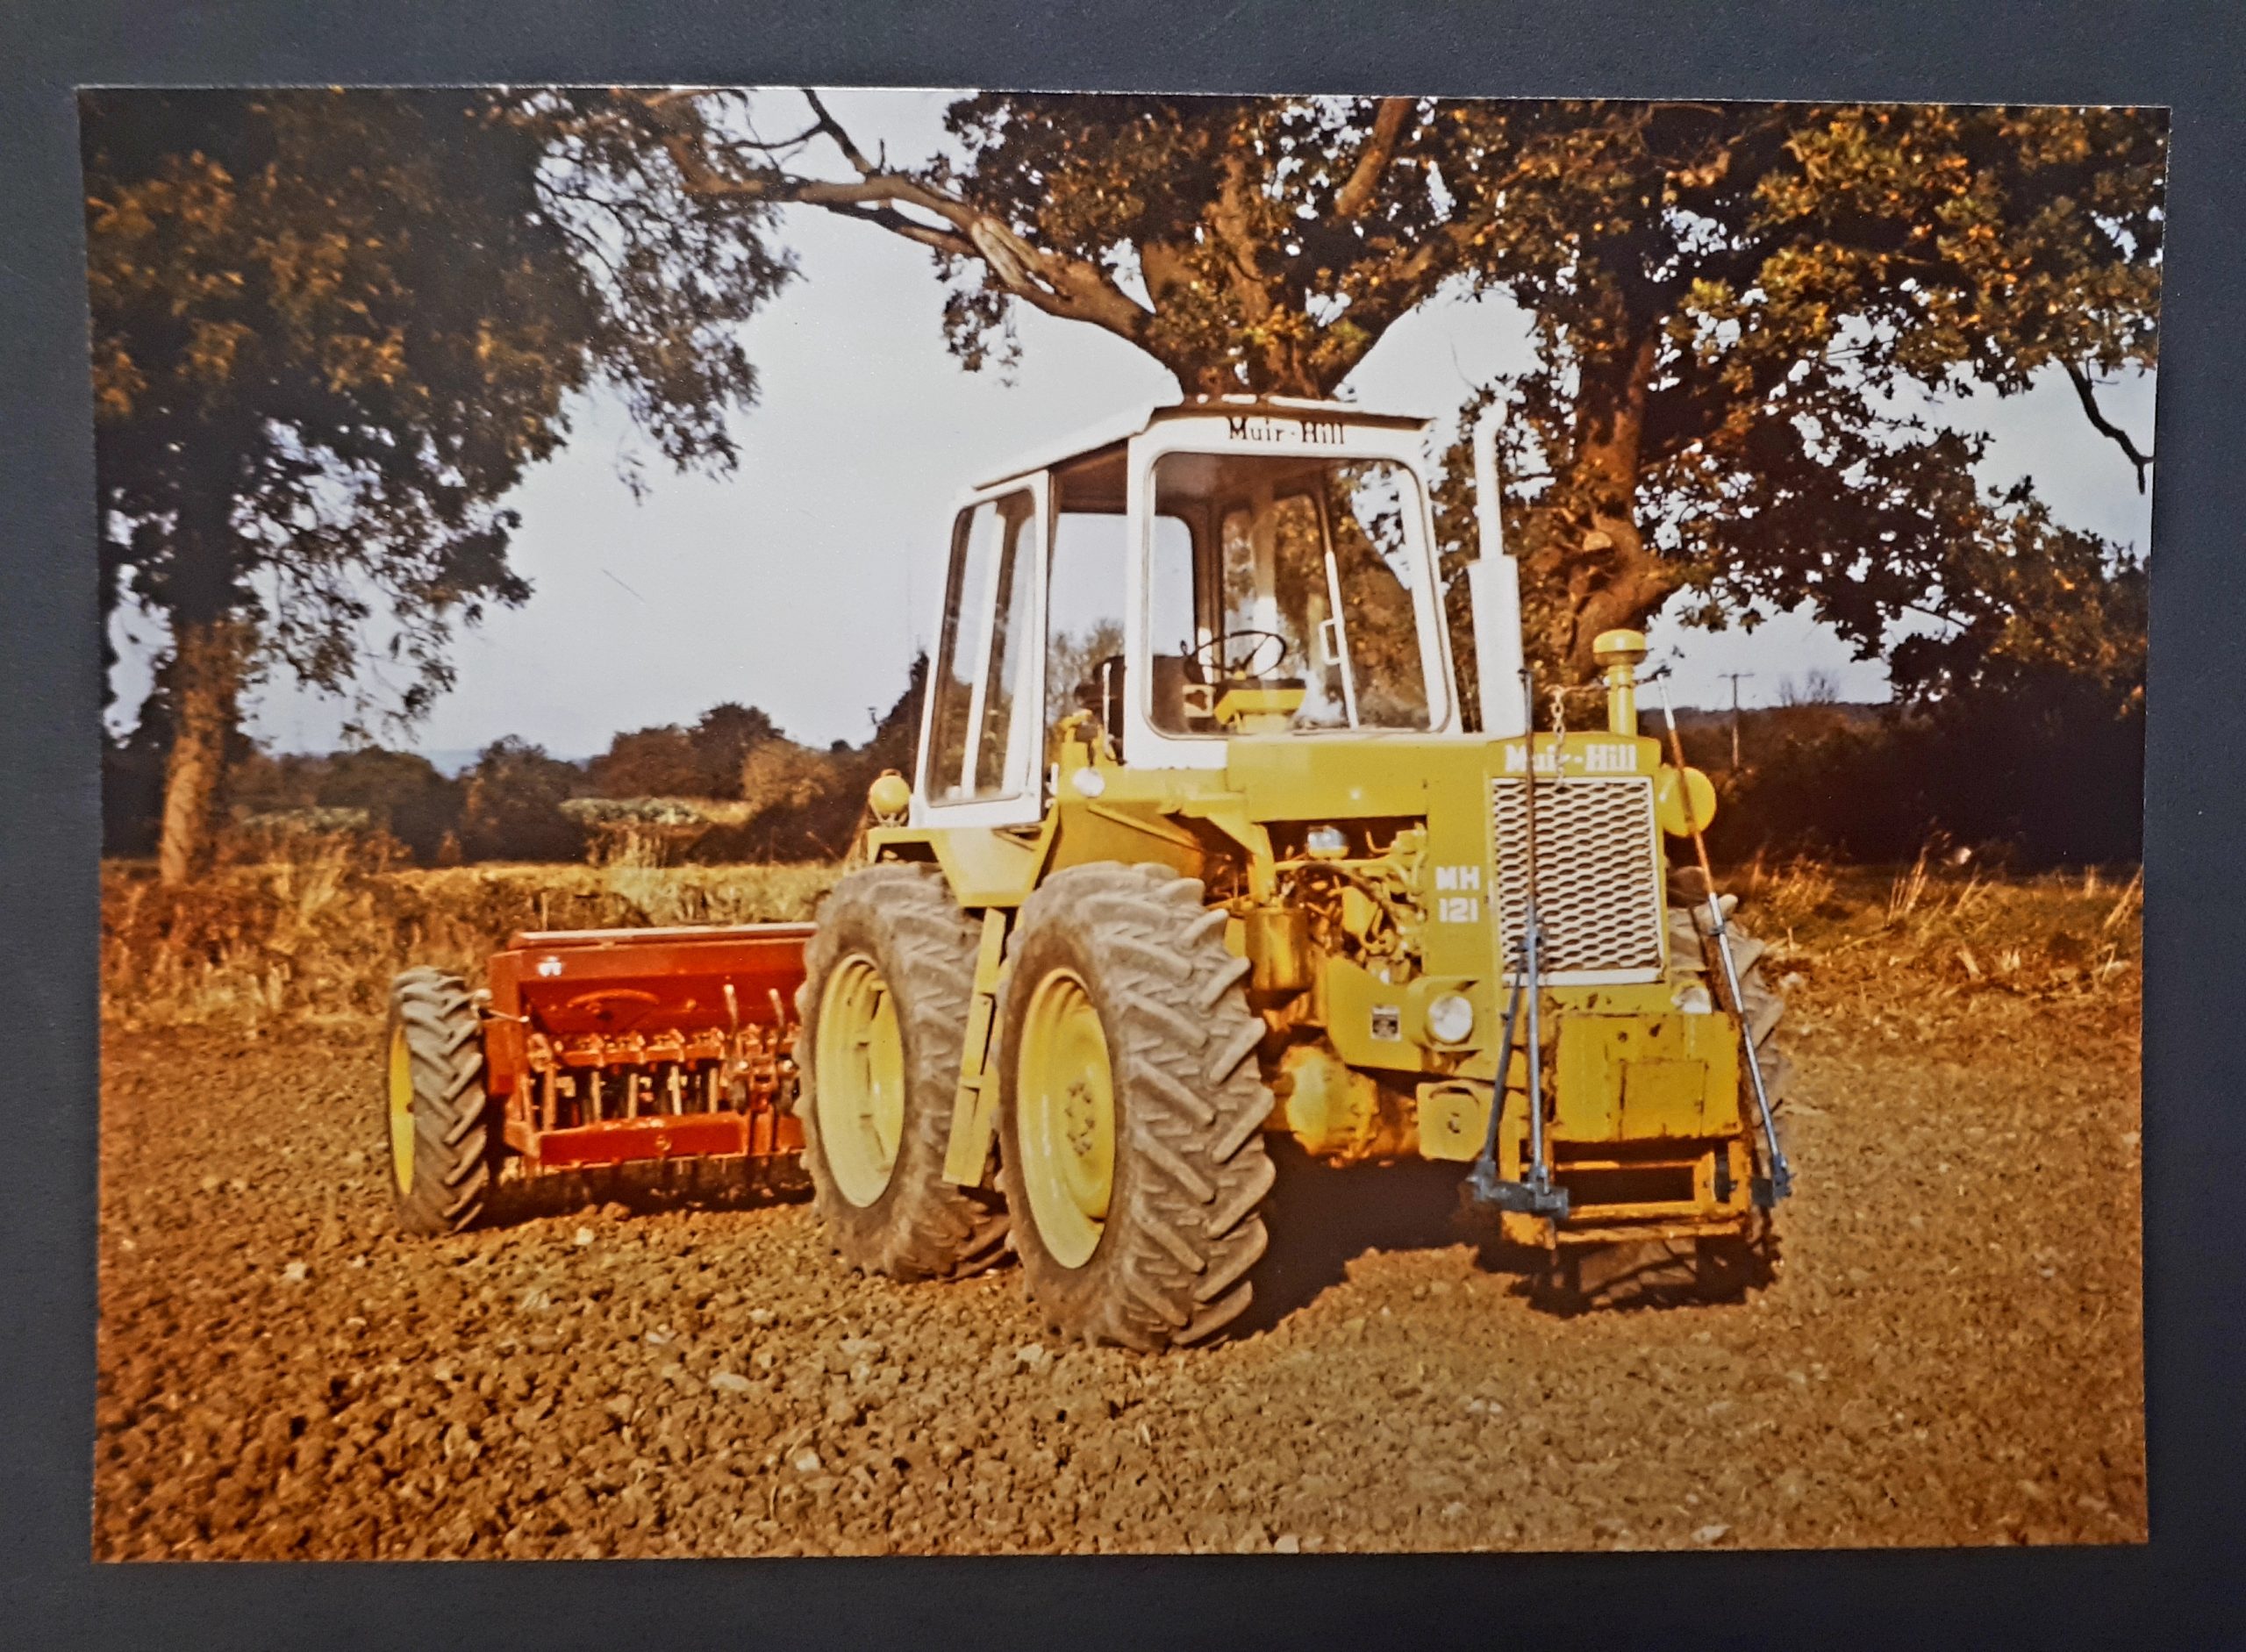 4 Wheel Drive Tractor and Seed Drill, Patchett's Farm, Tardebigge Ref: 899.156 BA 1332 WPS 55318 © J. Wormington Esq.